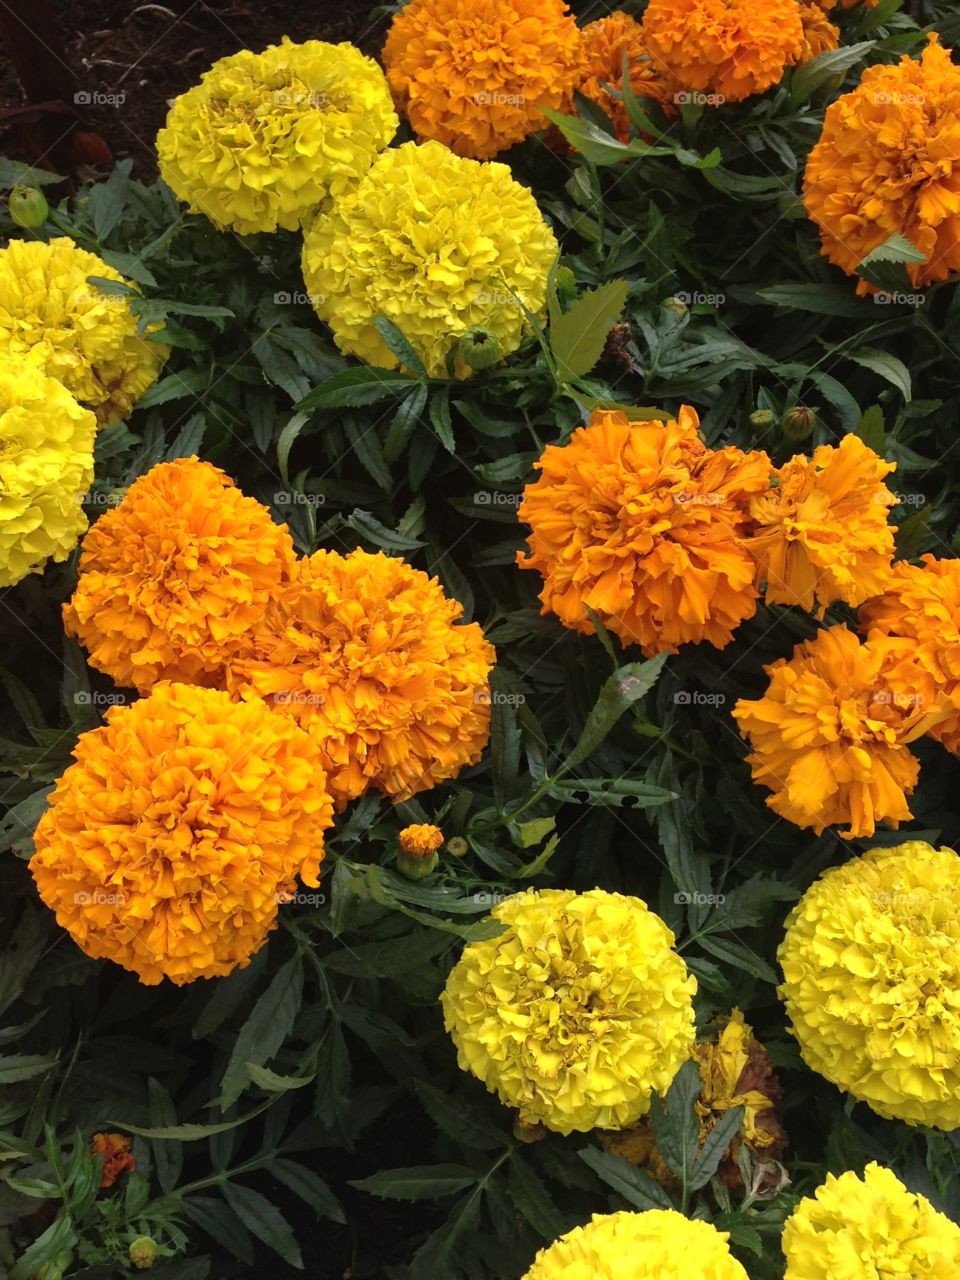 Marigold flowers offering 